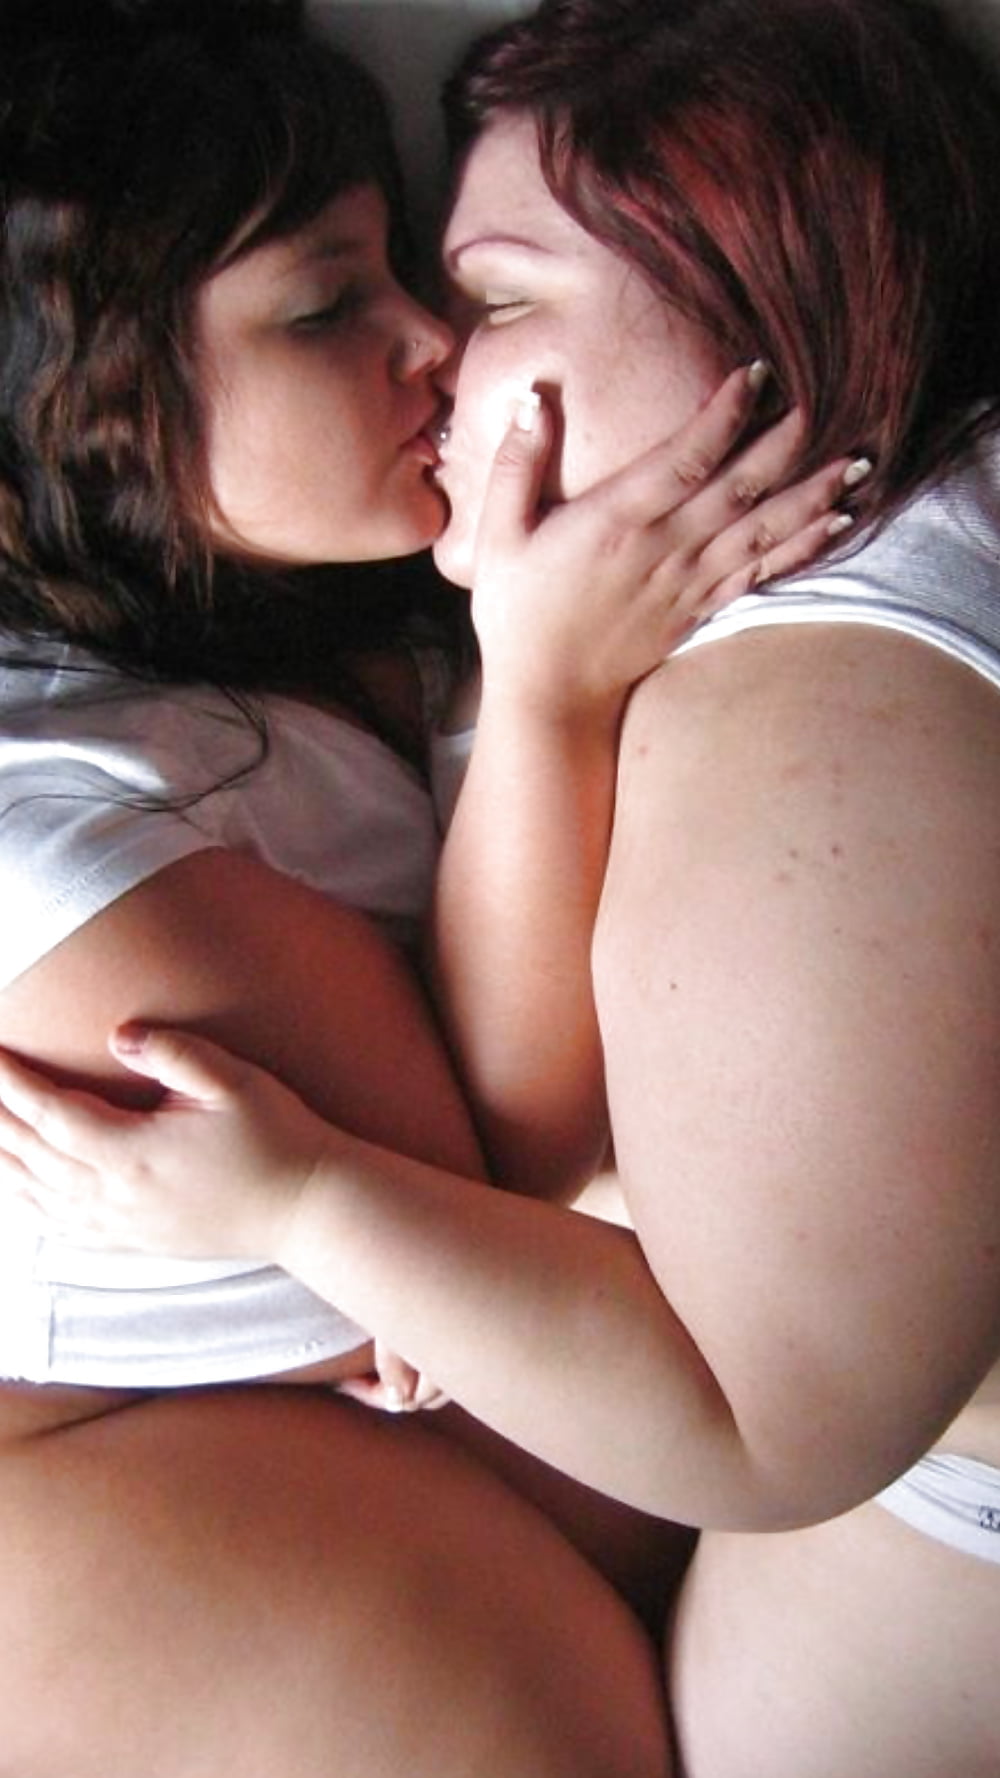 Bbw lesbian french kiss